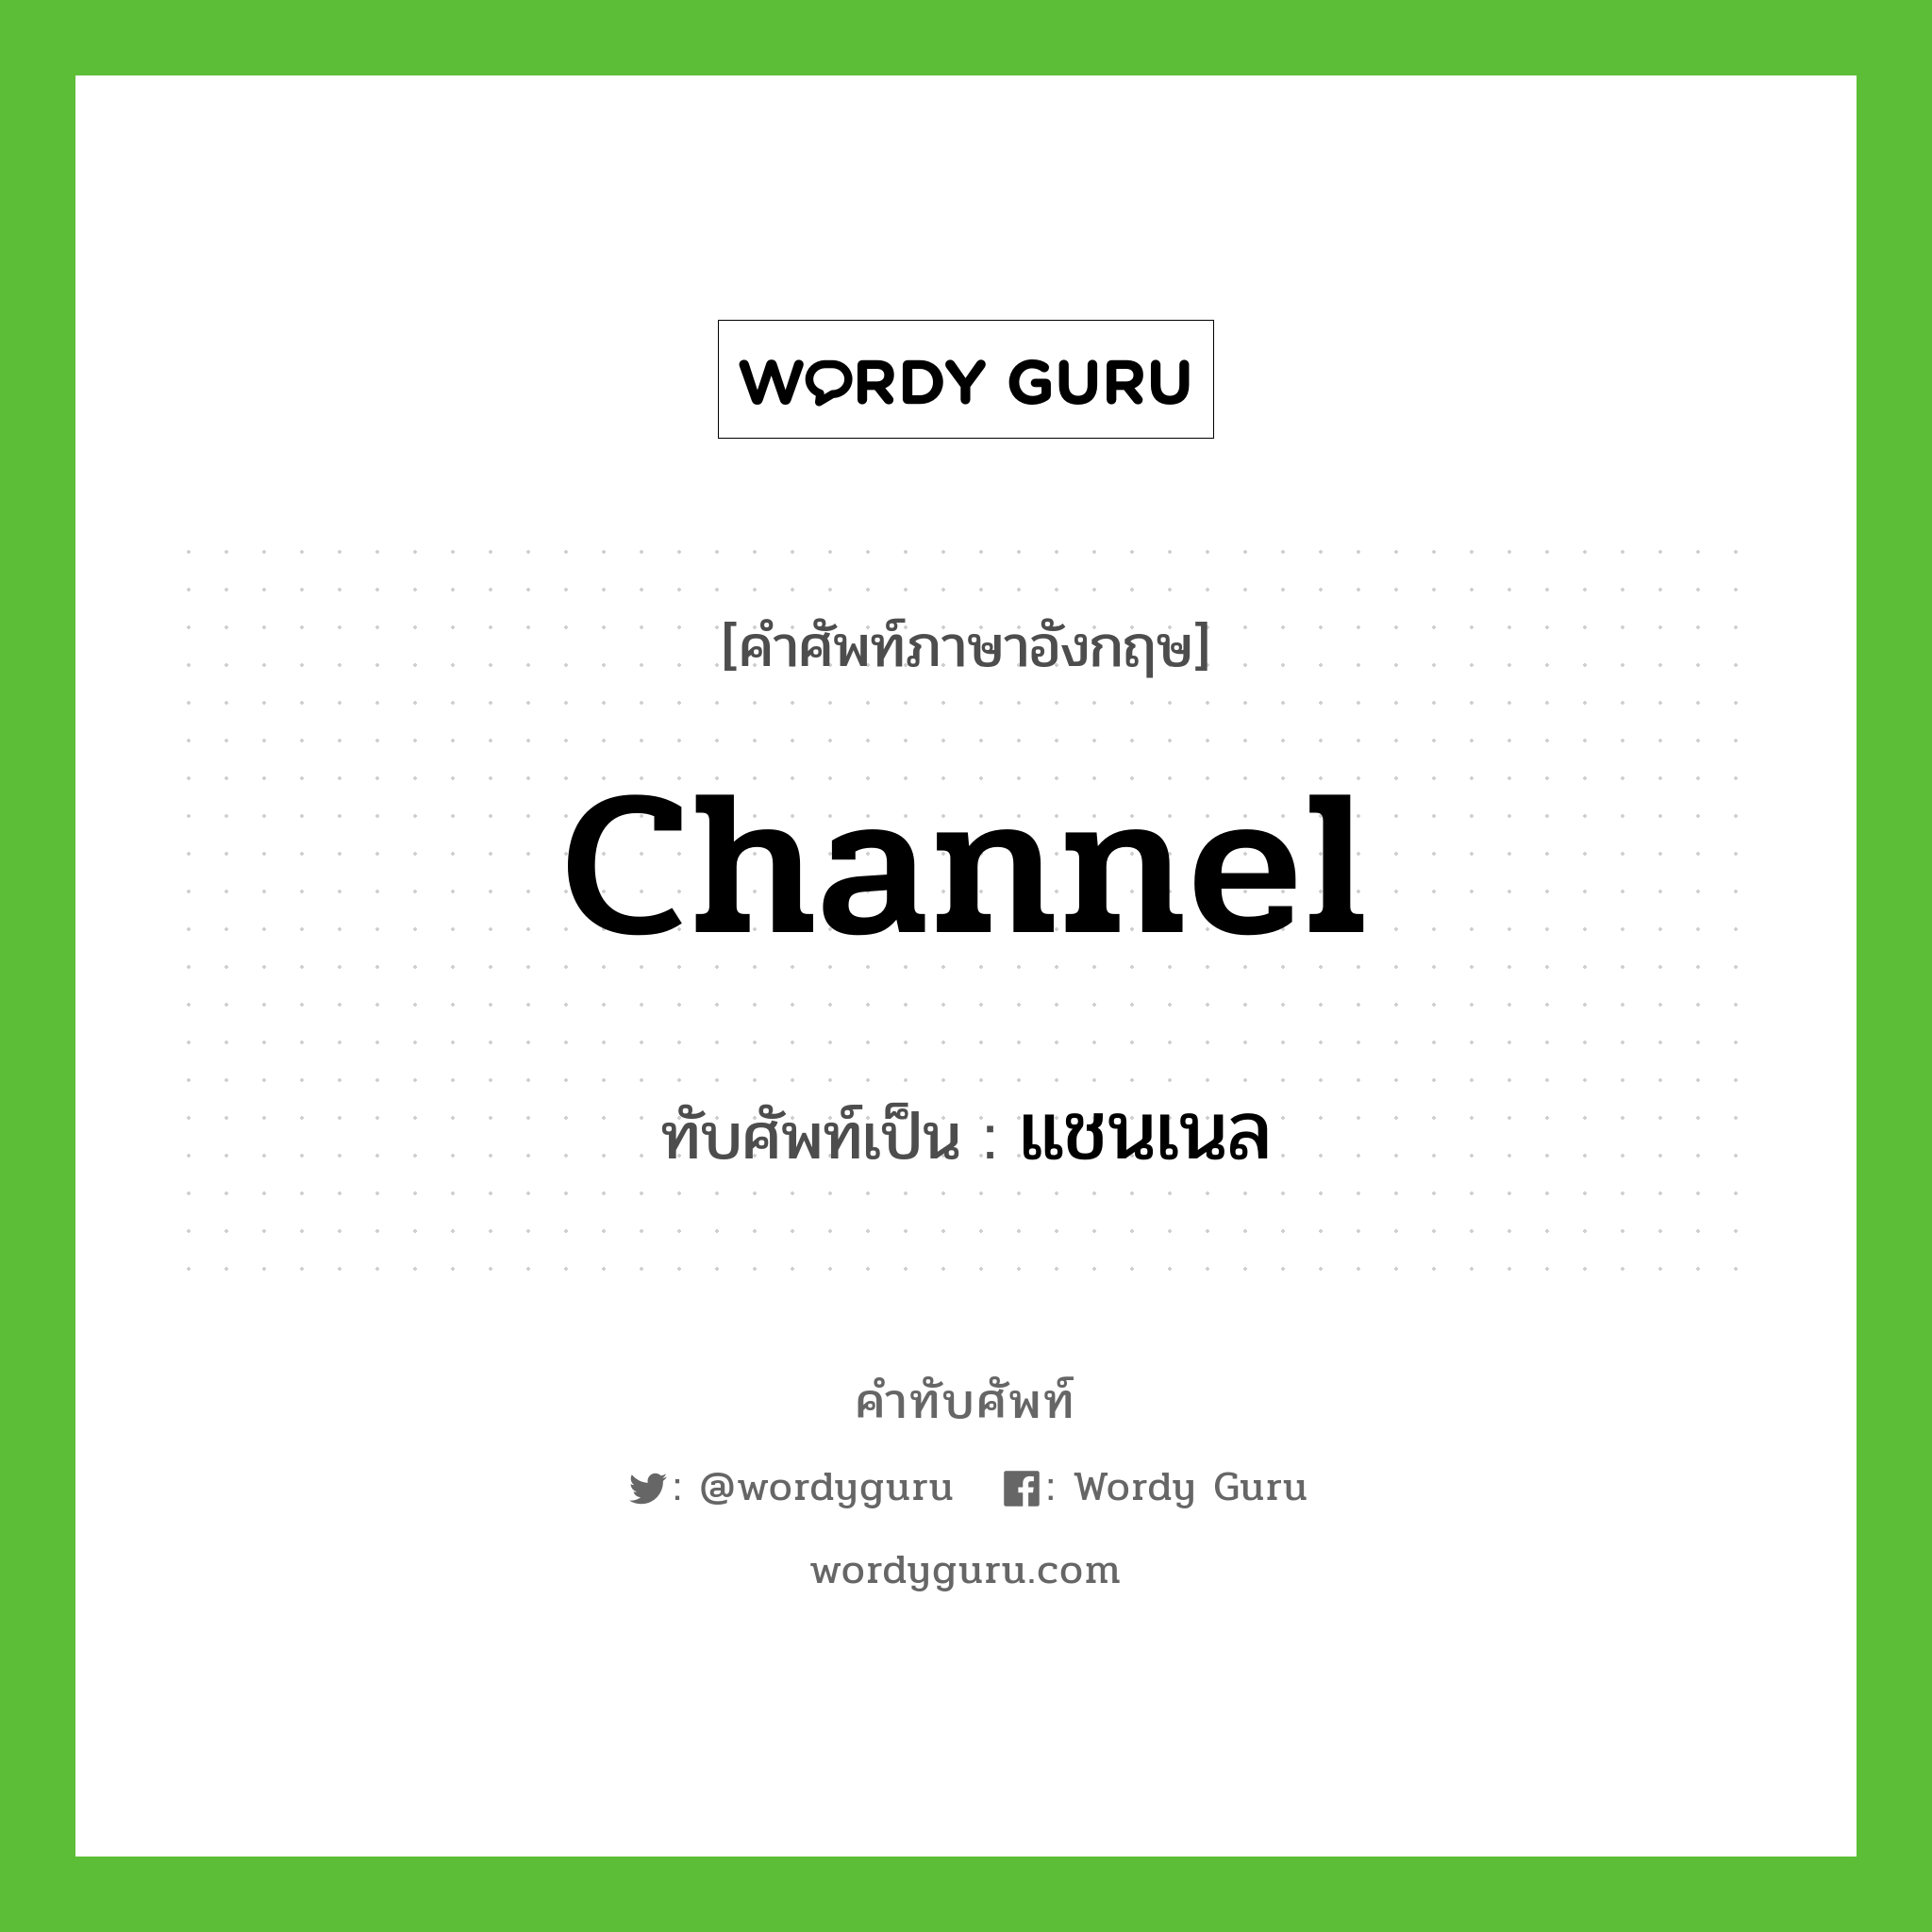 channel เขียนเป็นคำไทยว่าอะไร?, คำศัพท์ภาษาอังกฤษ channel ทับศัพท์เป็น แชนเนล